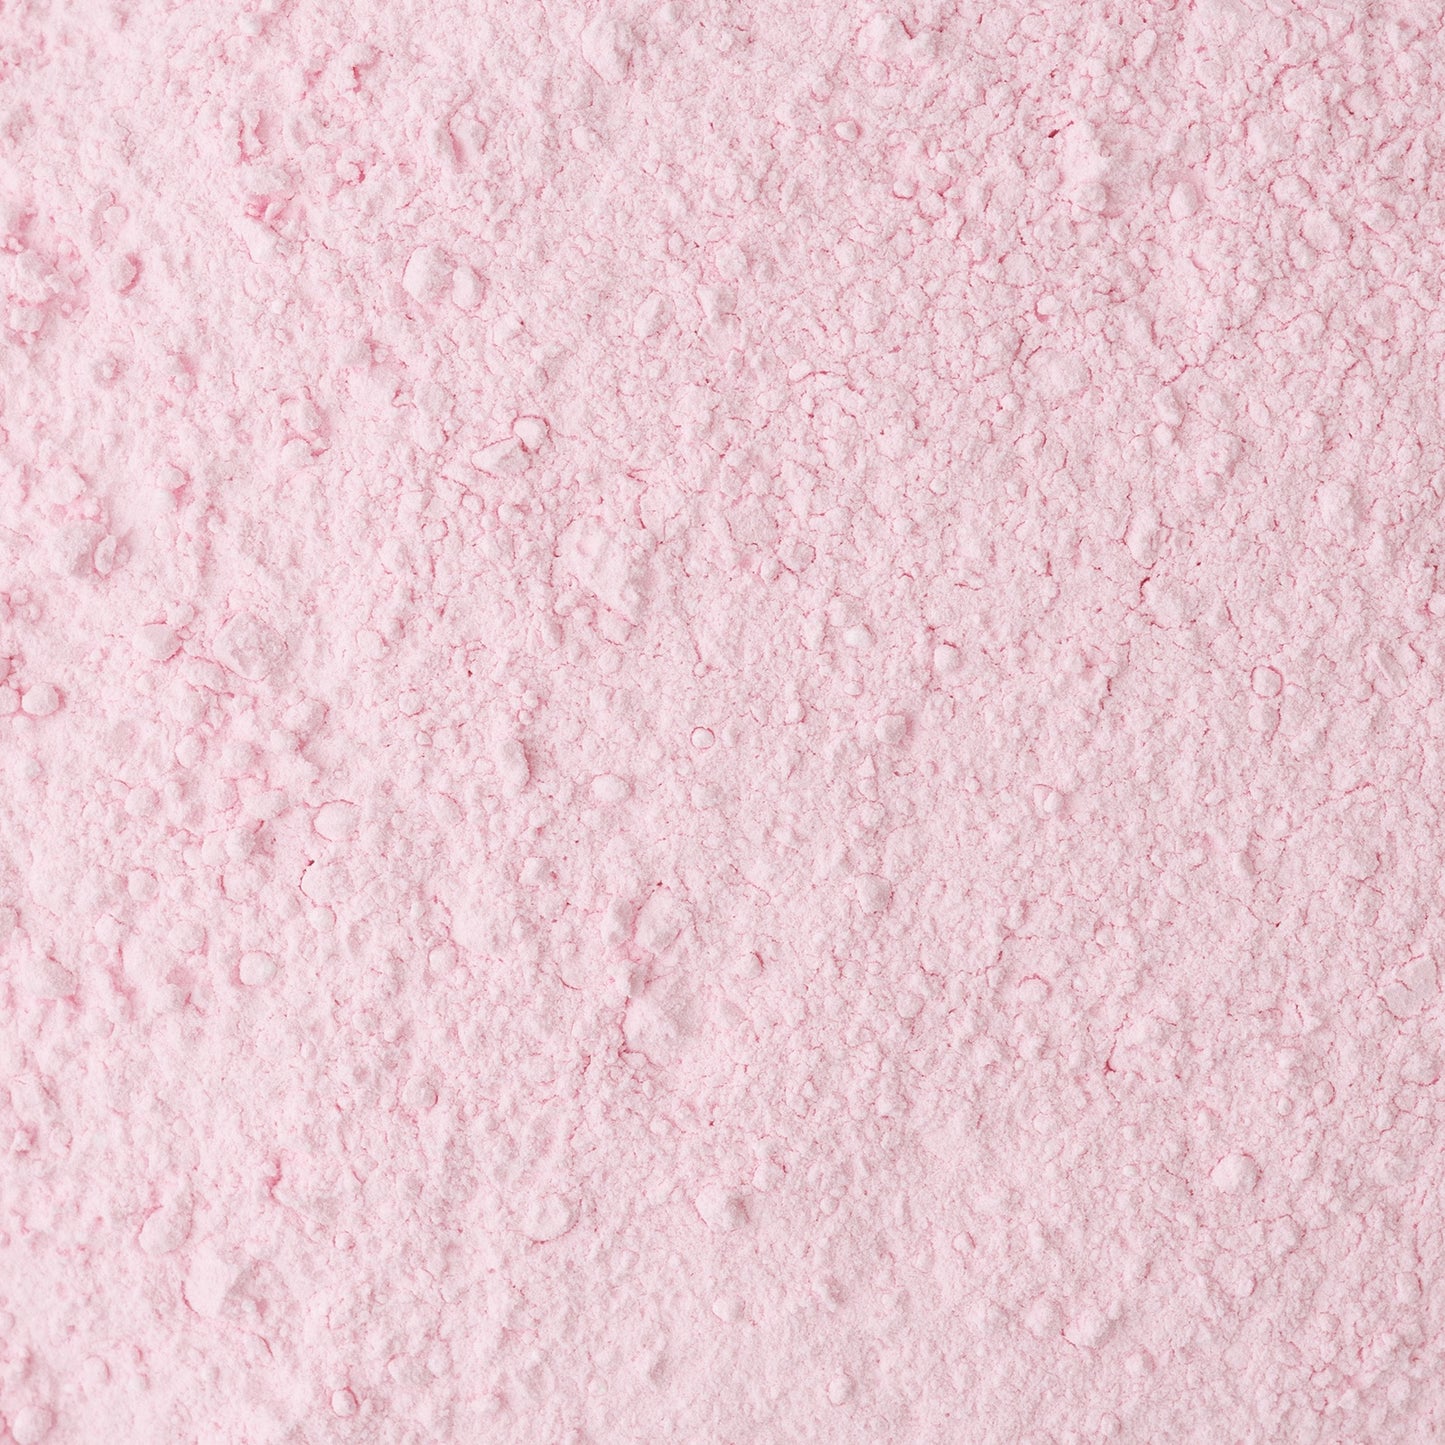 Sweetshop Powdered Sugar 1lb-Pink